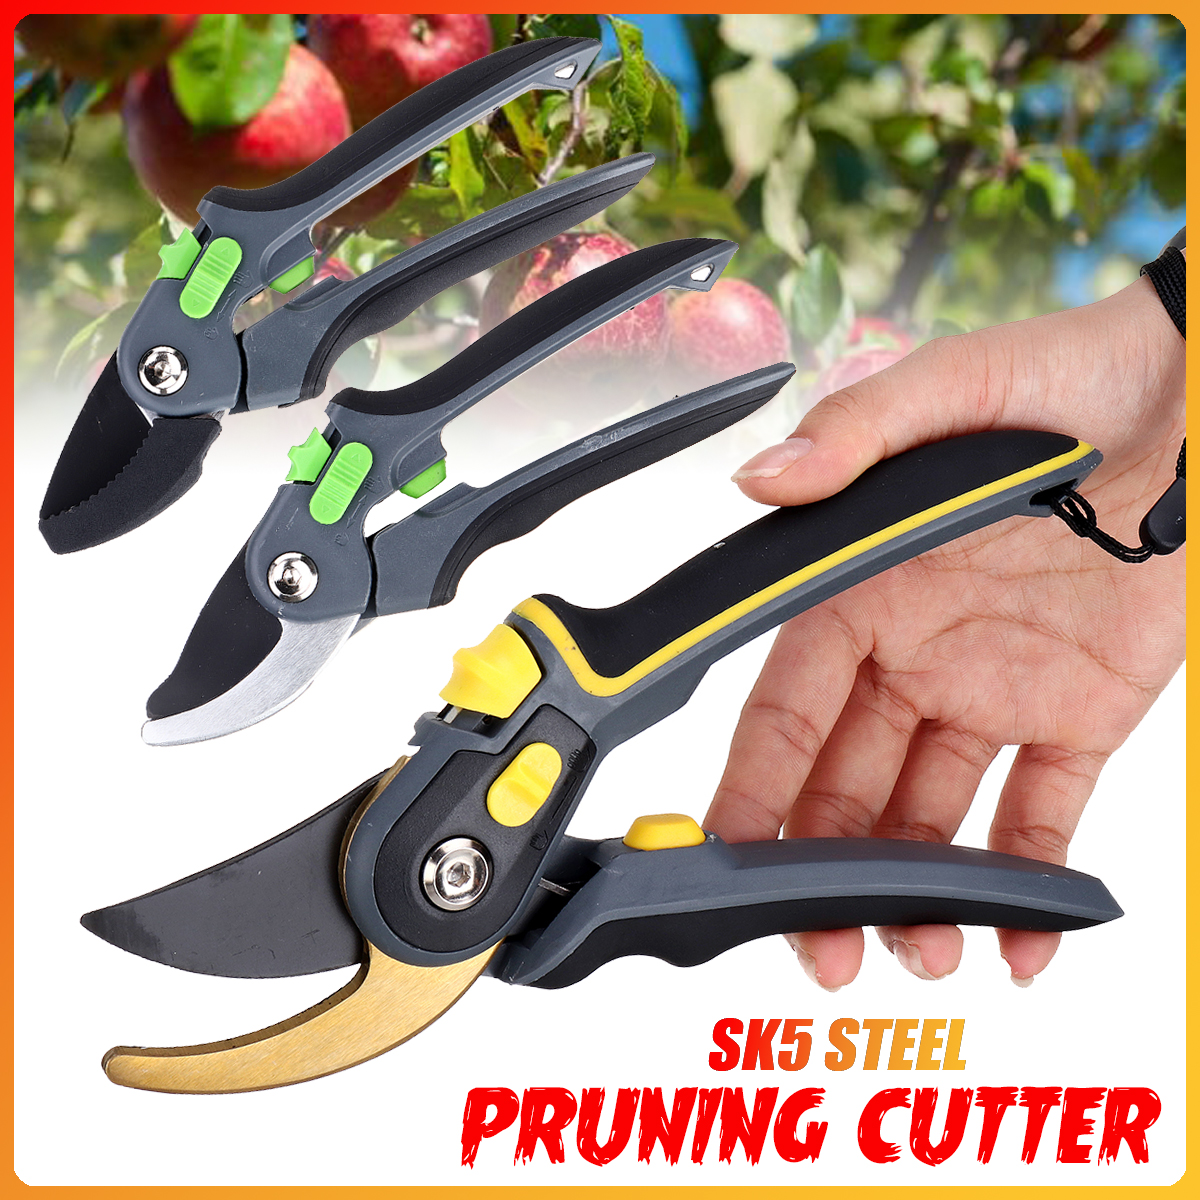 Pruning-Shear-Cutter-Garden-Tools-Labor-Saving-Steel-Scissors-Gardening-Plant-Branch-1693433-2